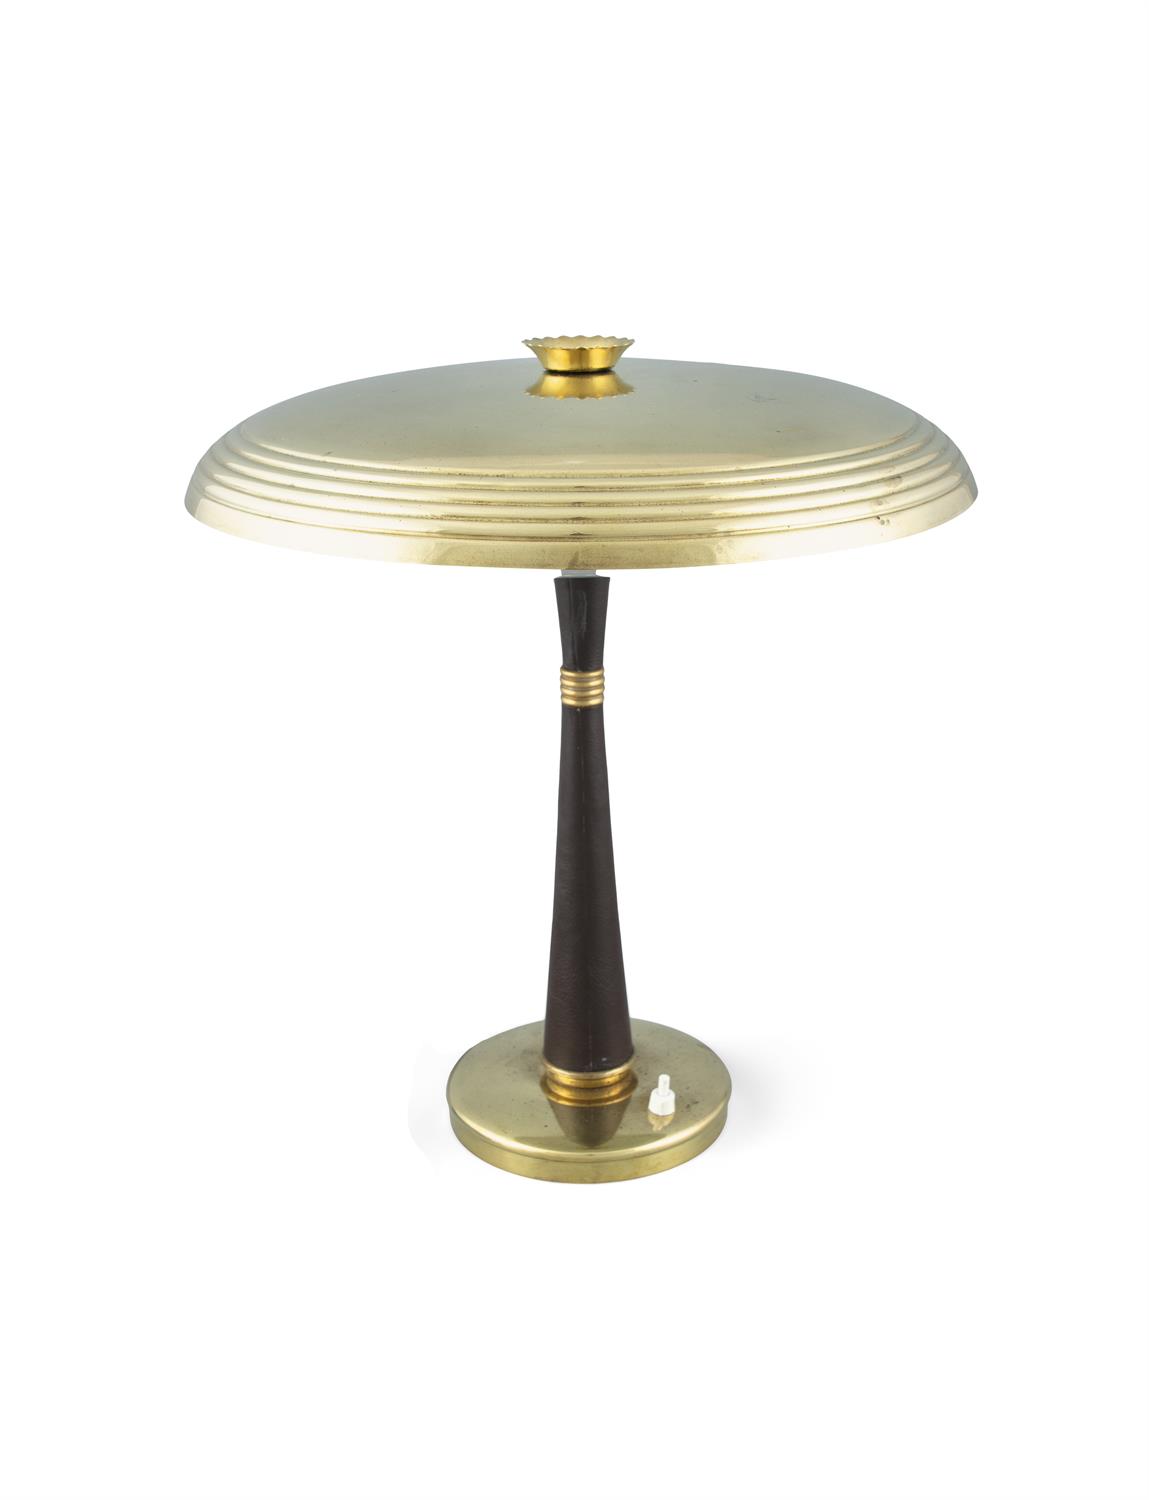 OSCAR TORLASCO (B. 1934) A brass 'Model 338' table lamp by Oscar Torlasco, for Lumi, c.1950.